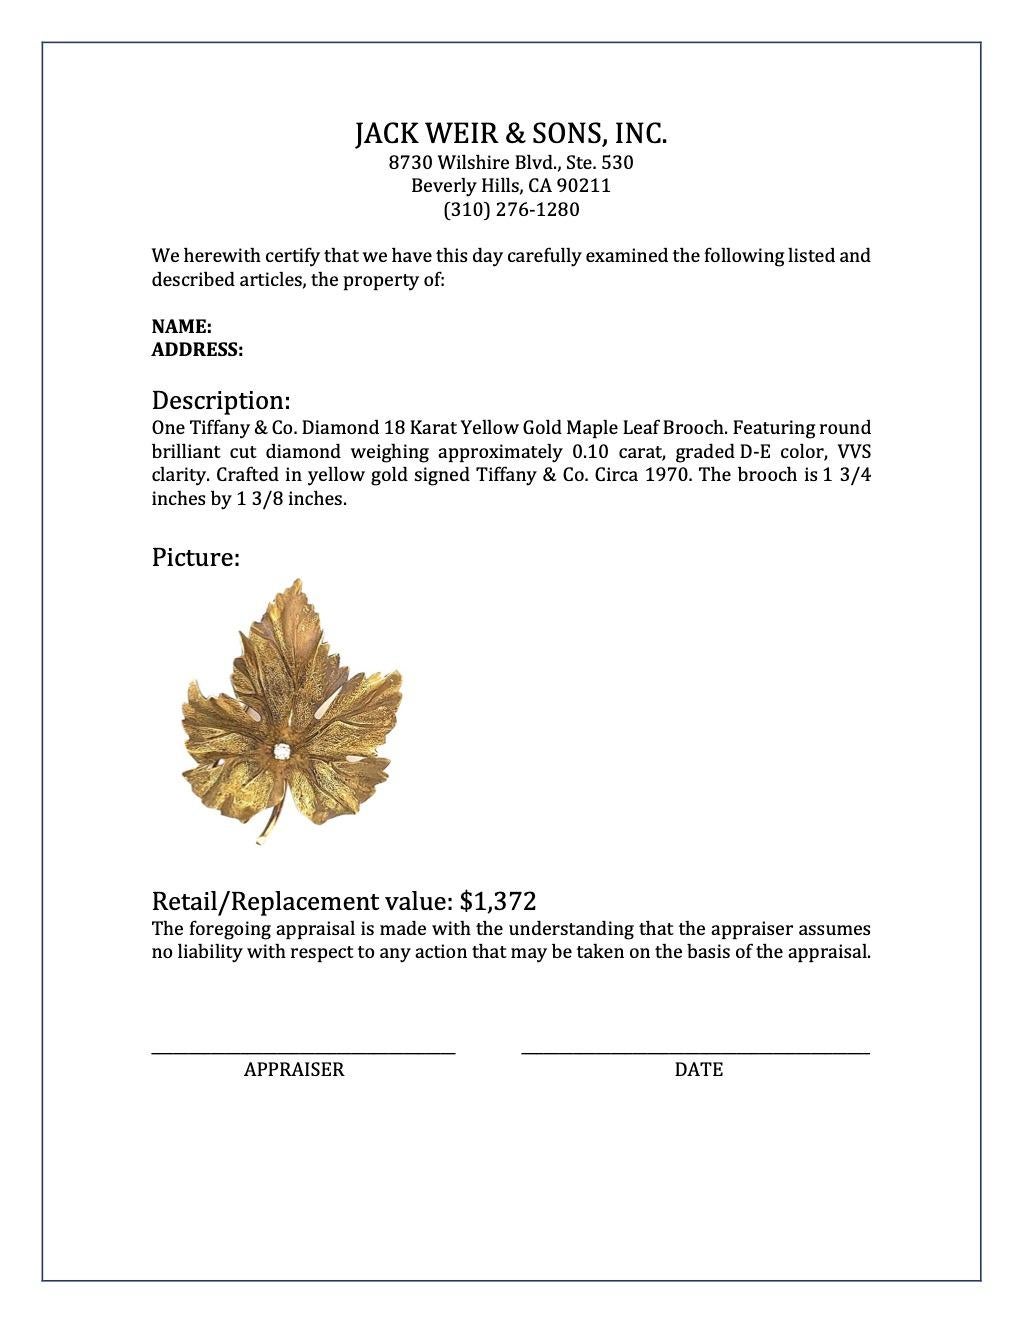 Tiffany & Co. Diamond 14 Karat Yellow Gold Maple Leaf Brooch 2